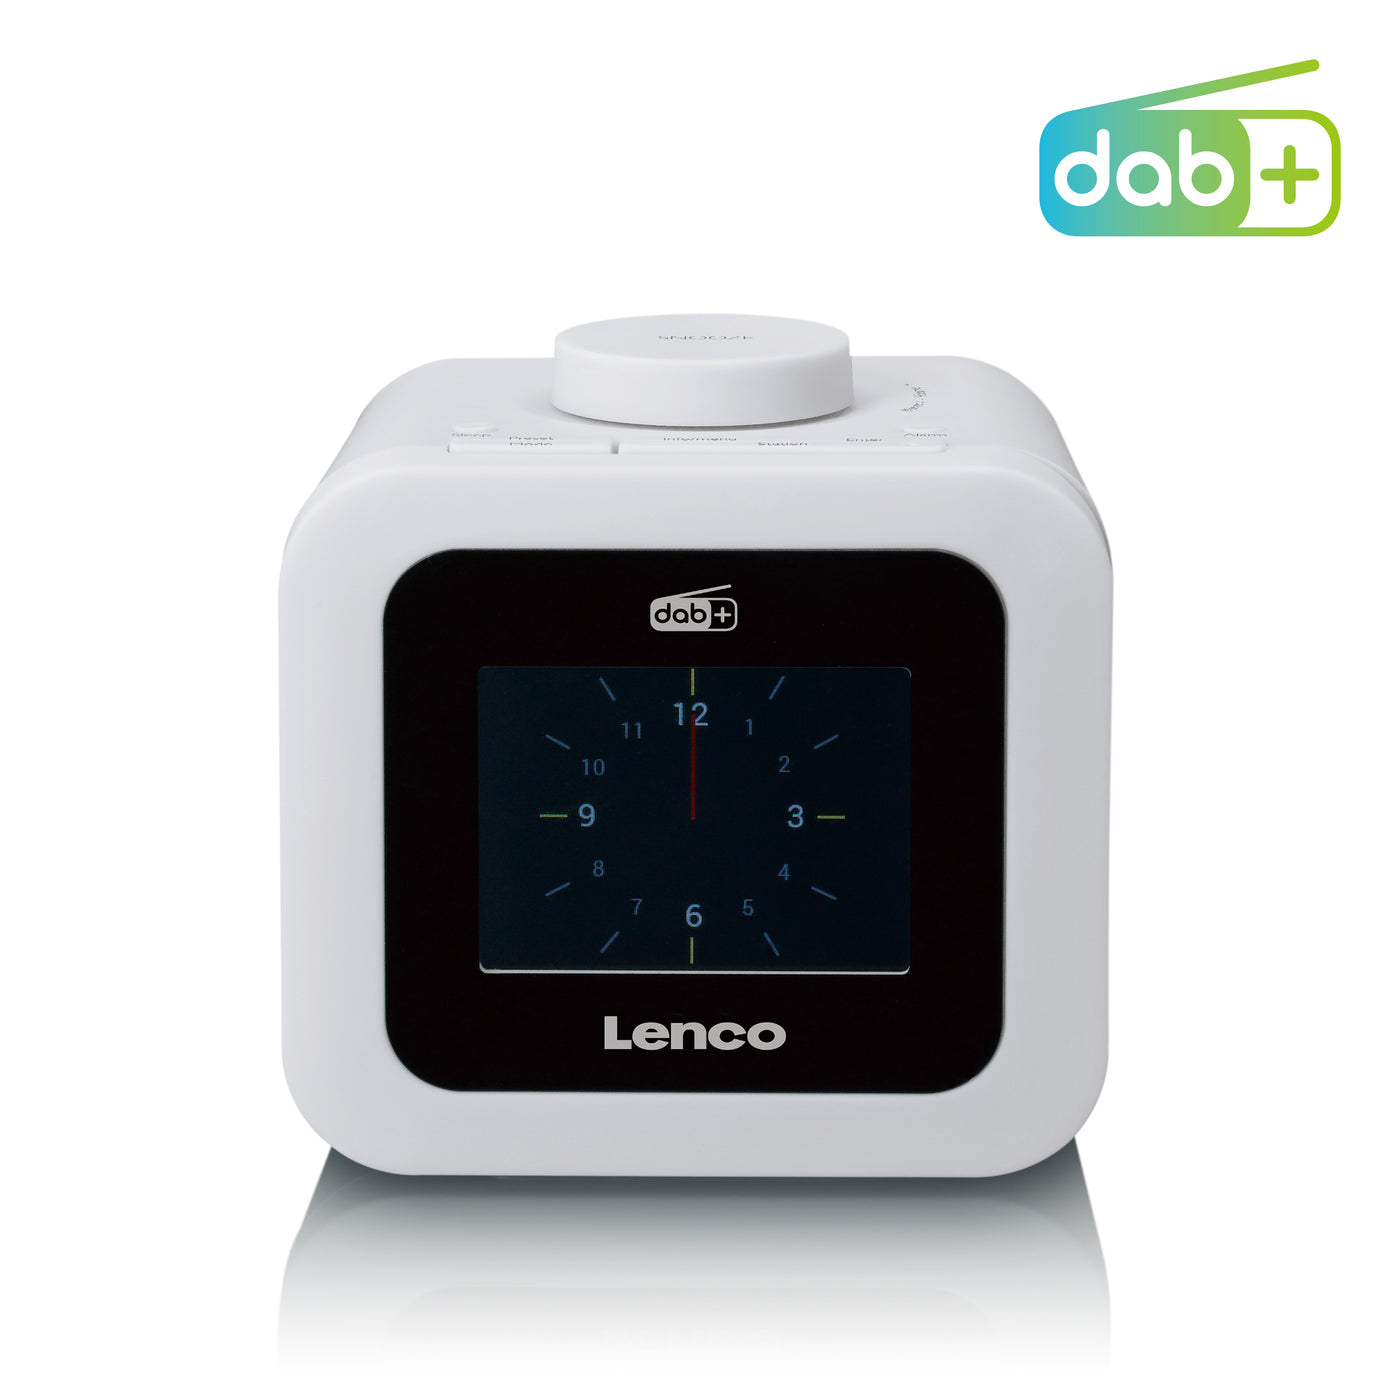 Lenco CR-620 - DAB+/FM clockradio